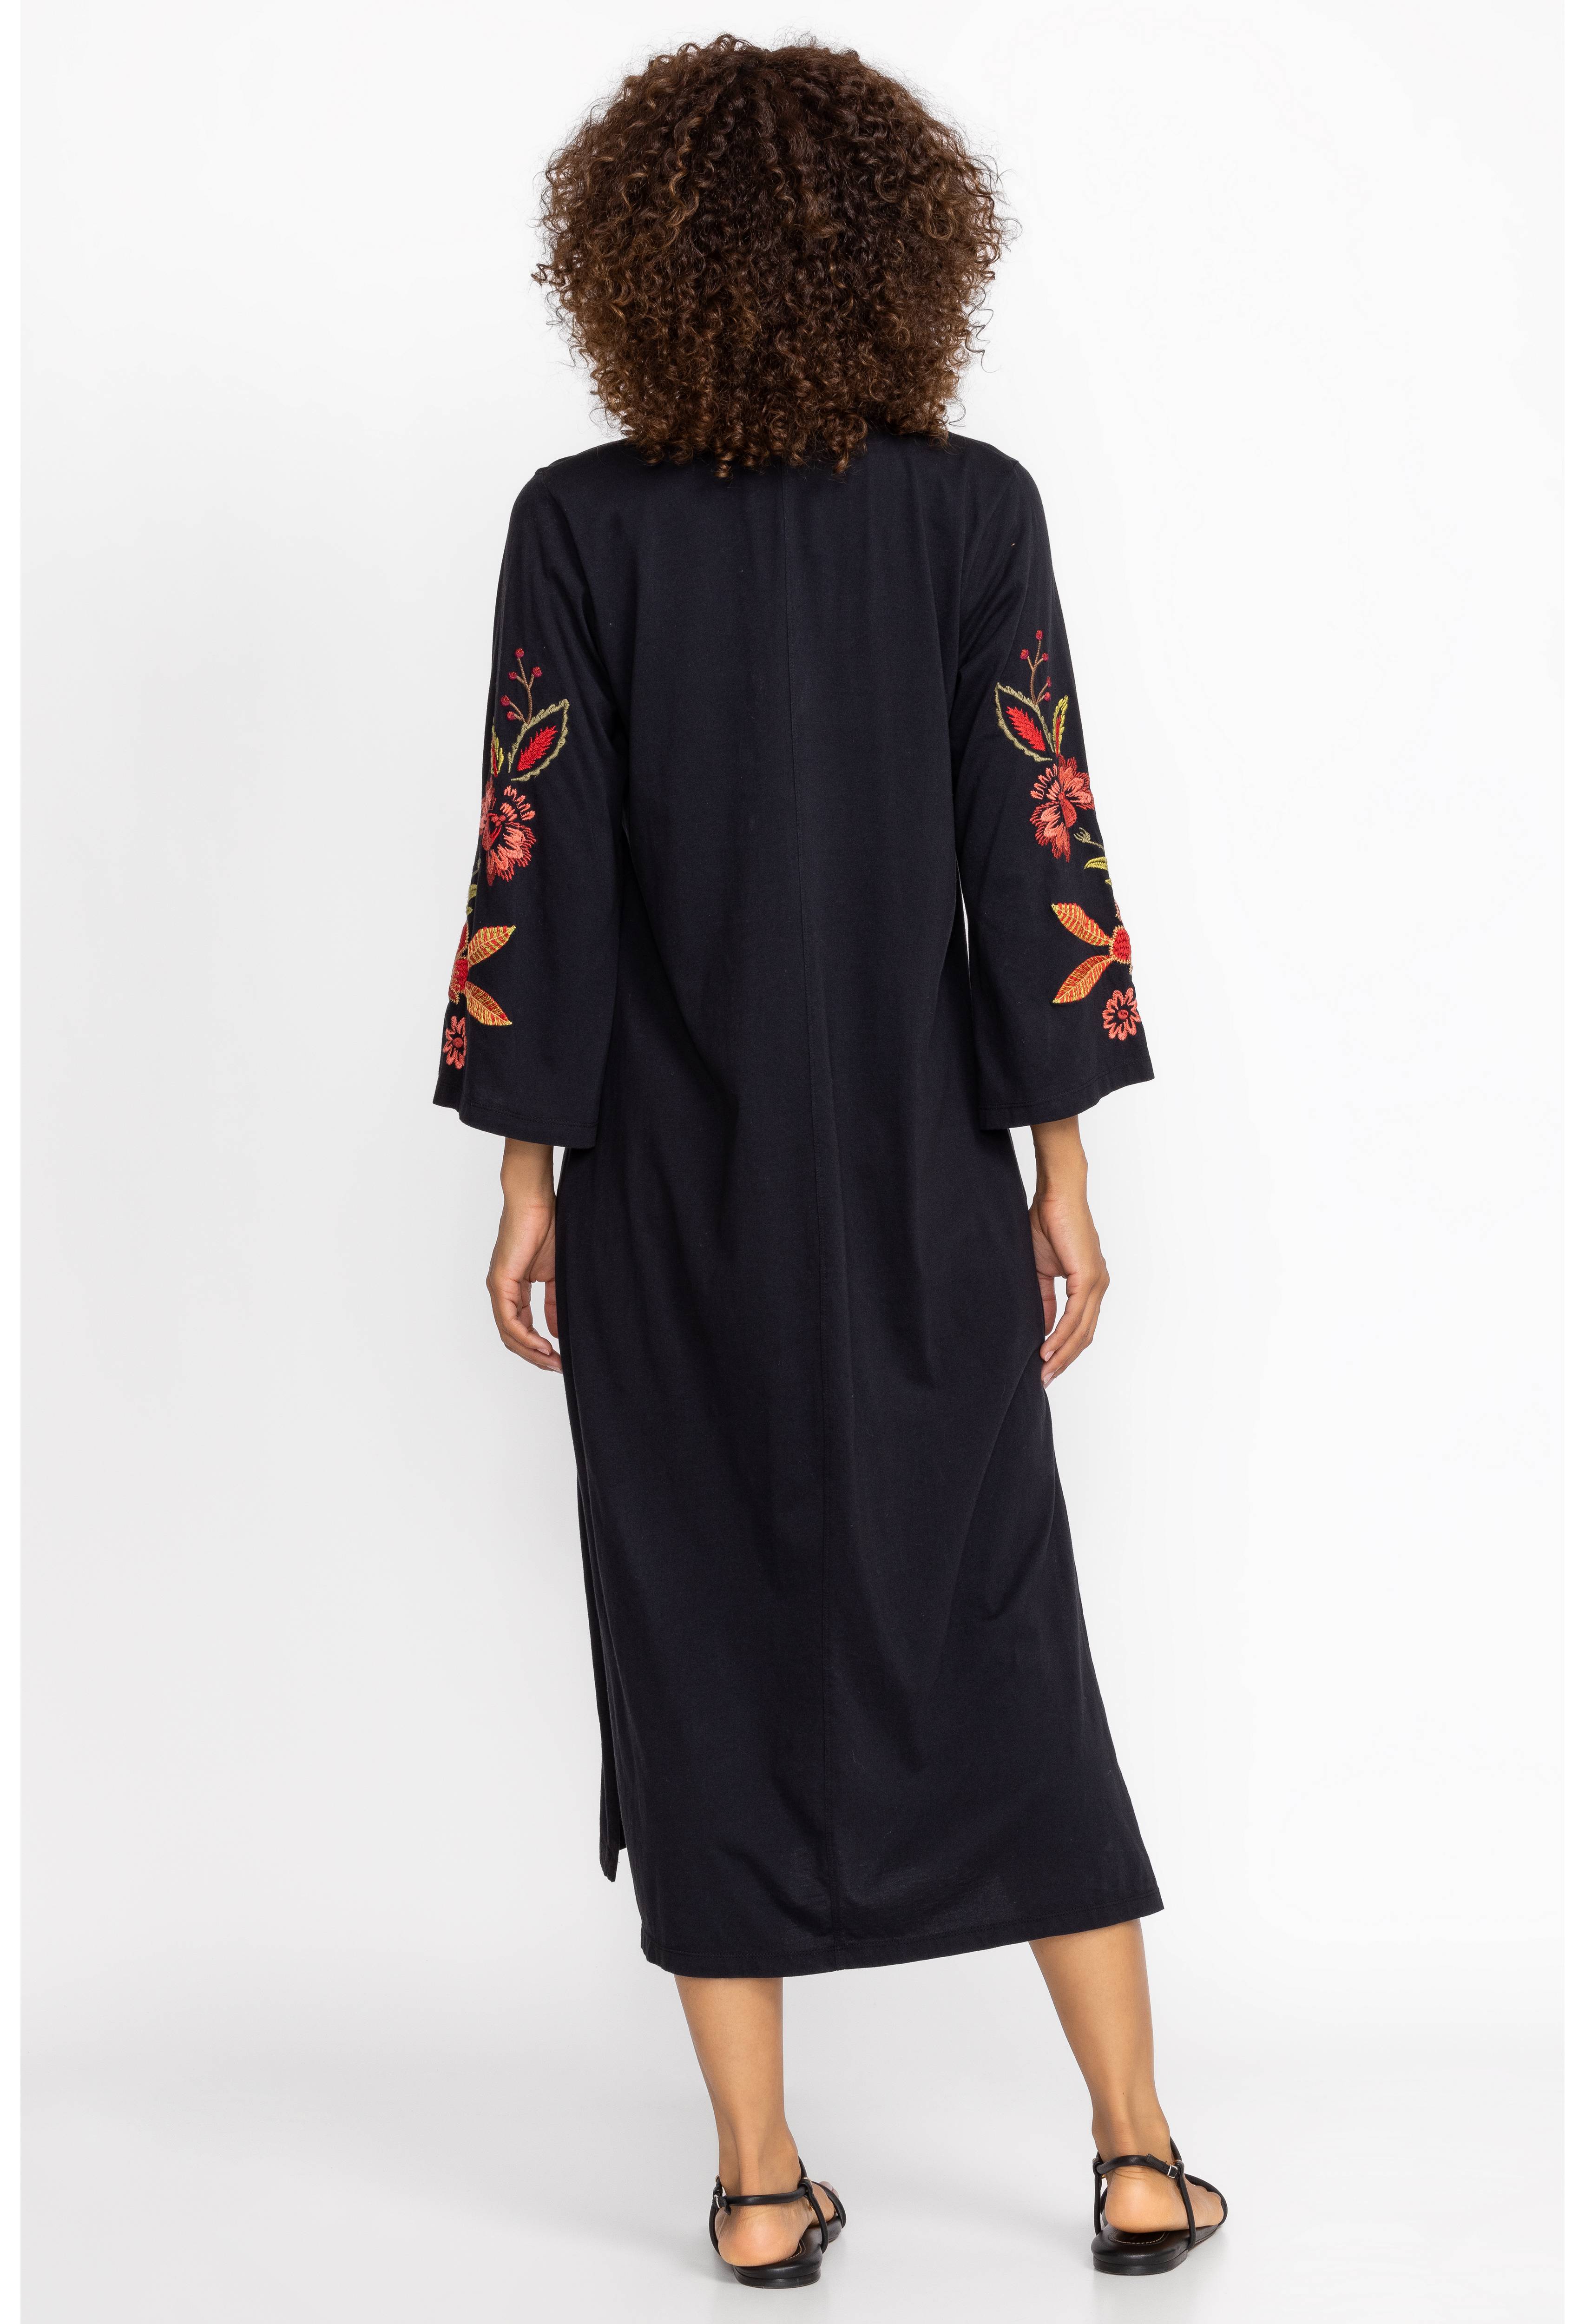 Isabella Kimono Sleeve Tee Dress, , large image number 4